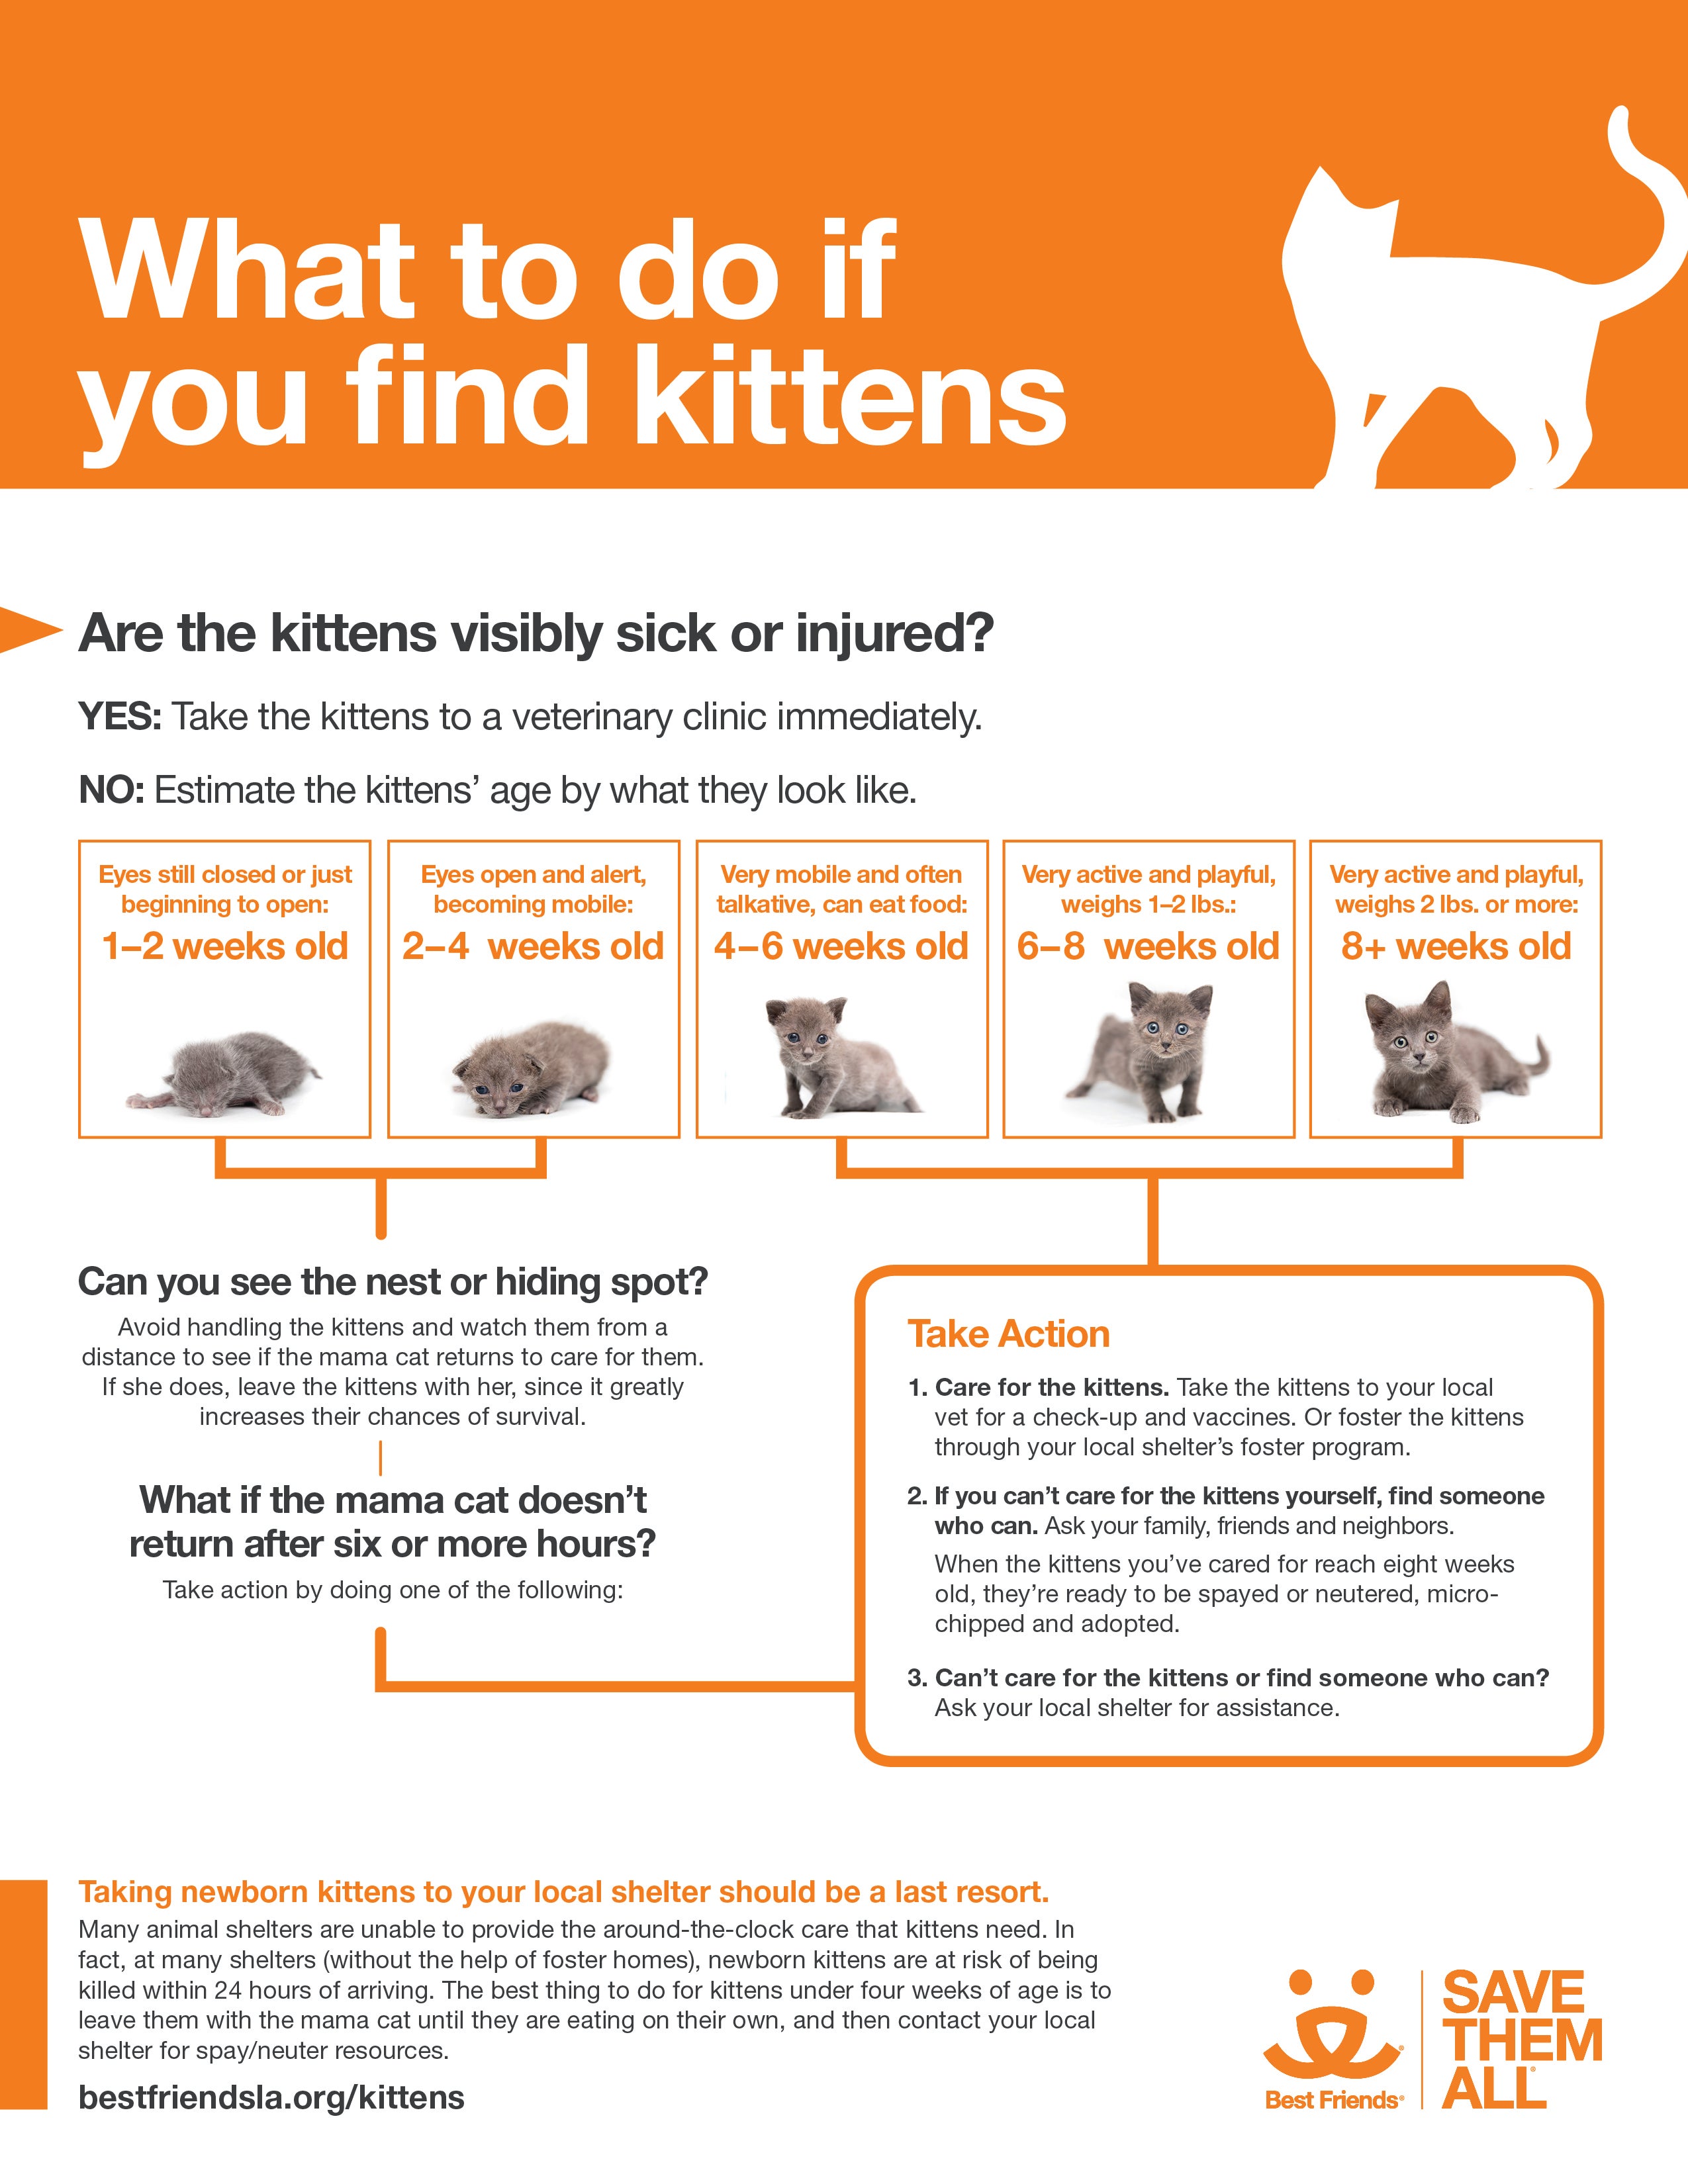 Virtual Kitten Shower Guide | Network Partners